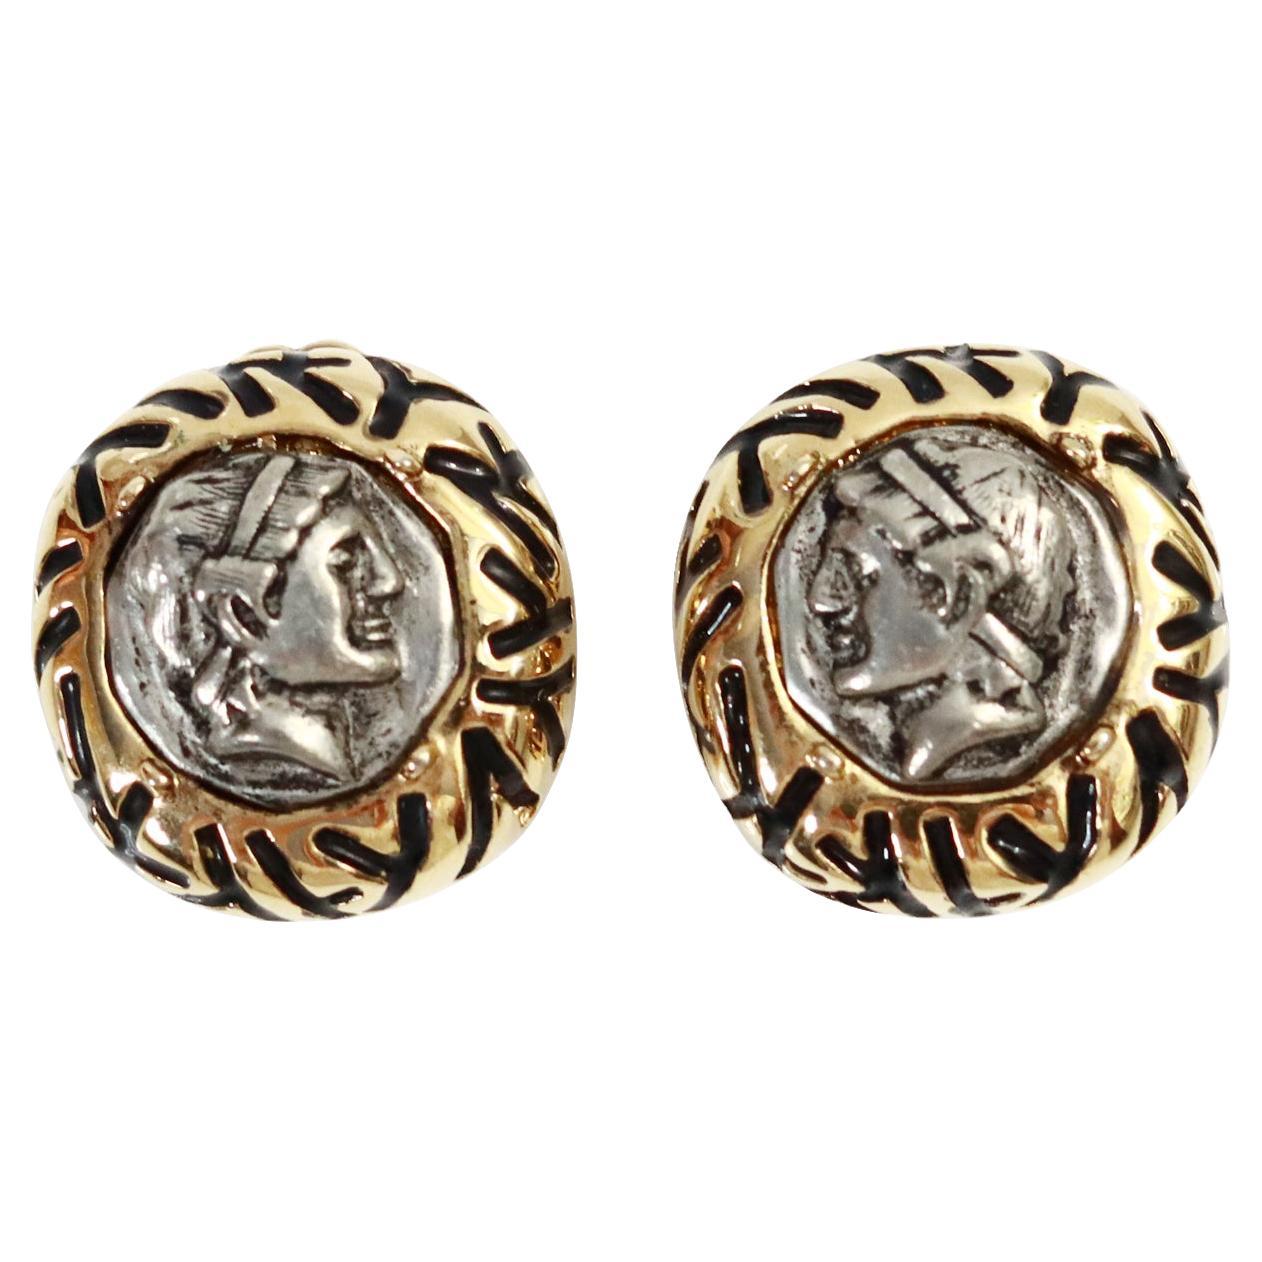 Vintage St John Gold Tone Roman Coin Earrings Circa 1990s